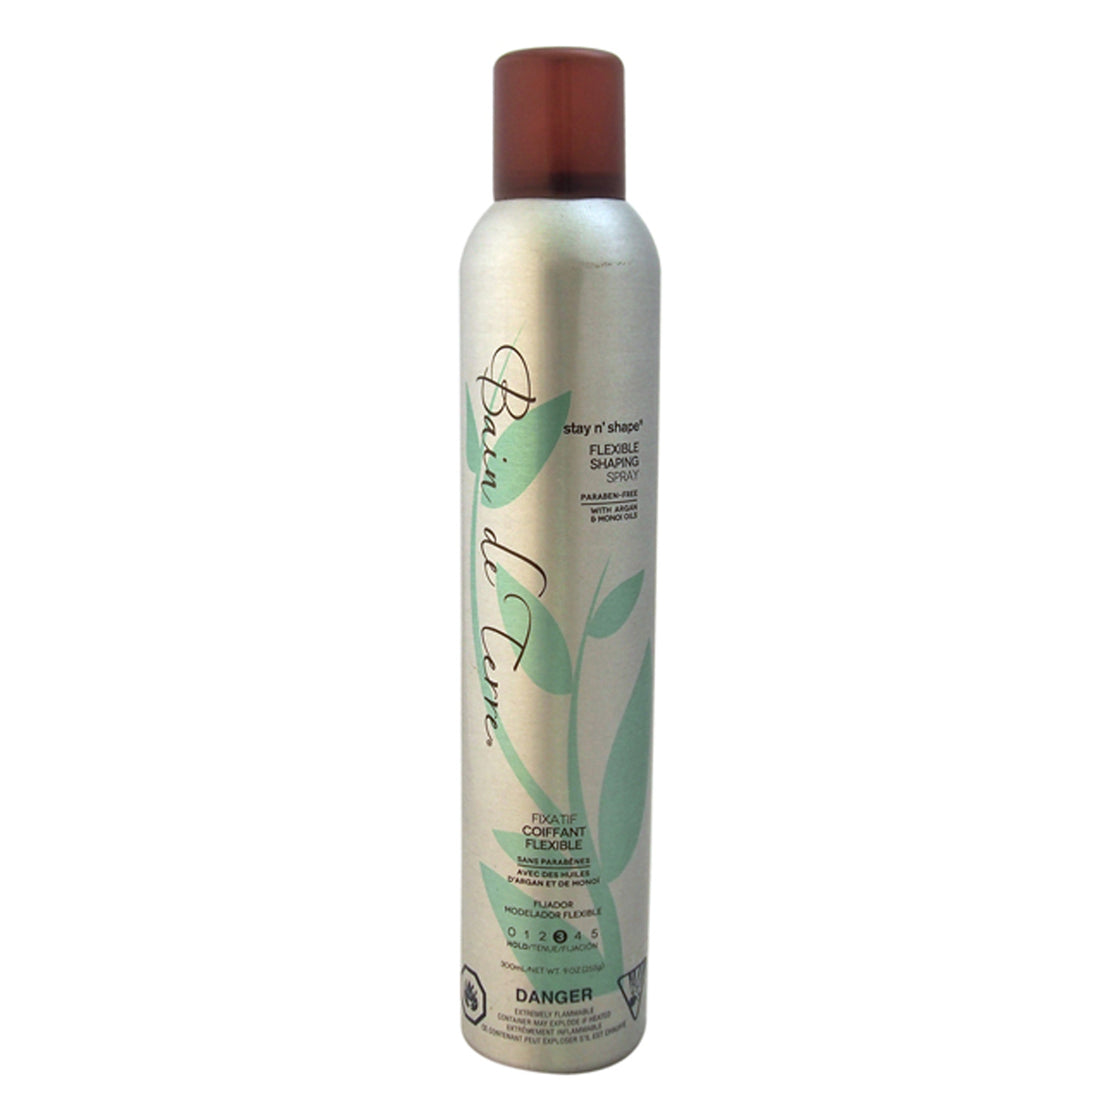 Stay N Shape Flexible Shaping Spray by Bain de Terre for Unisex - 9.1 oz Hair Spray